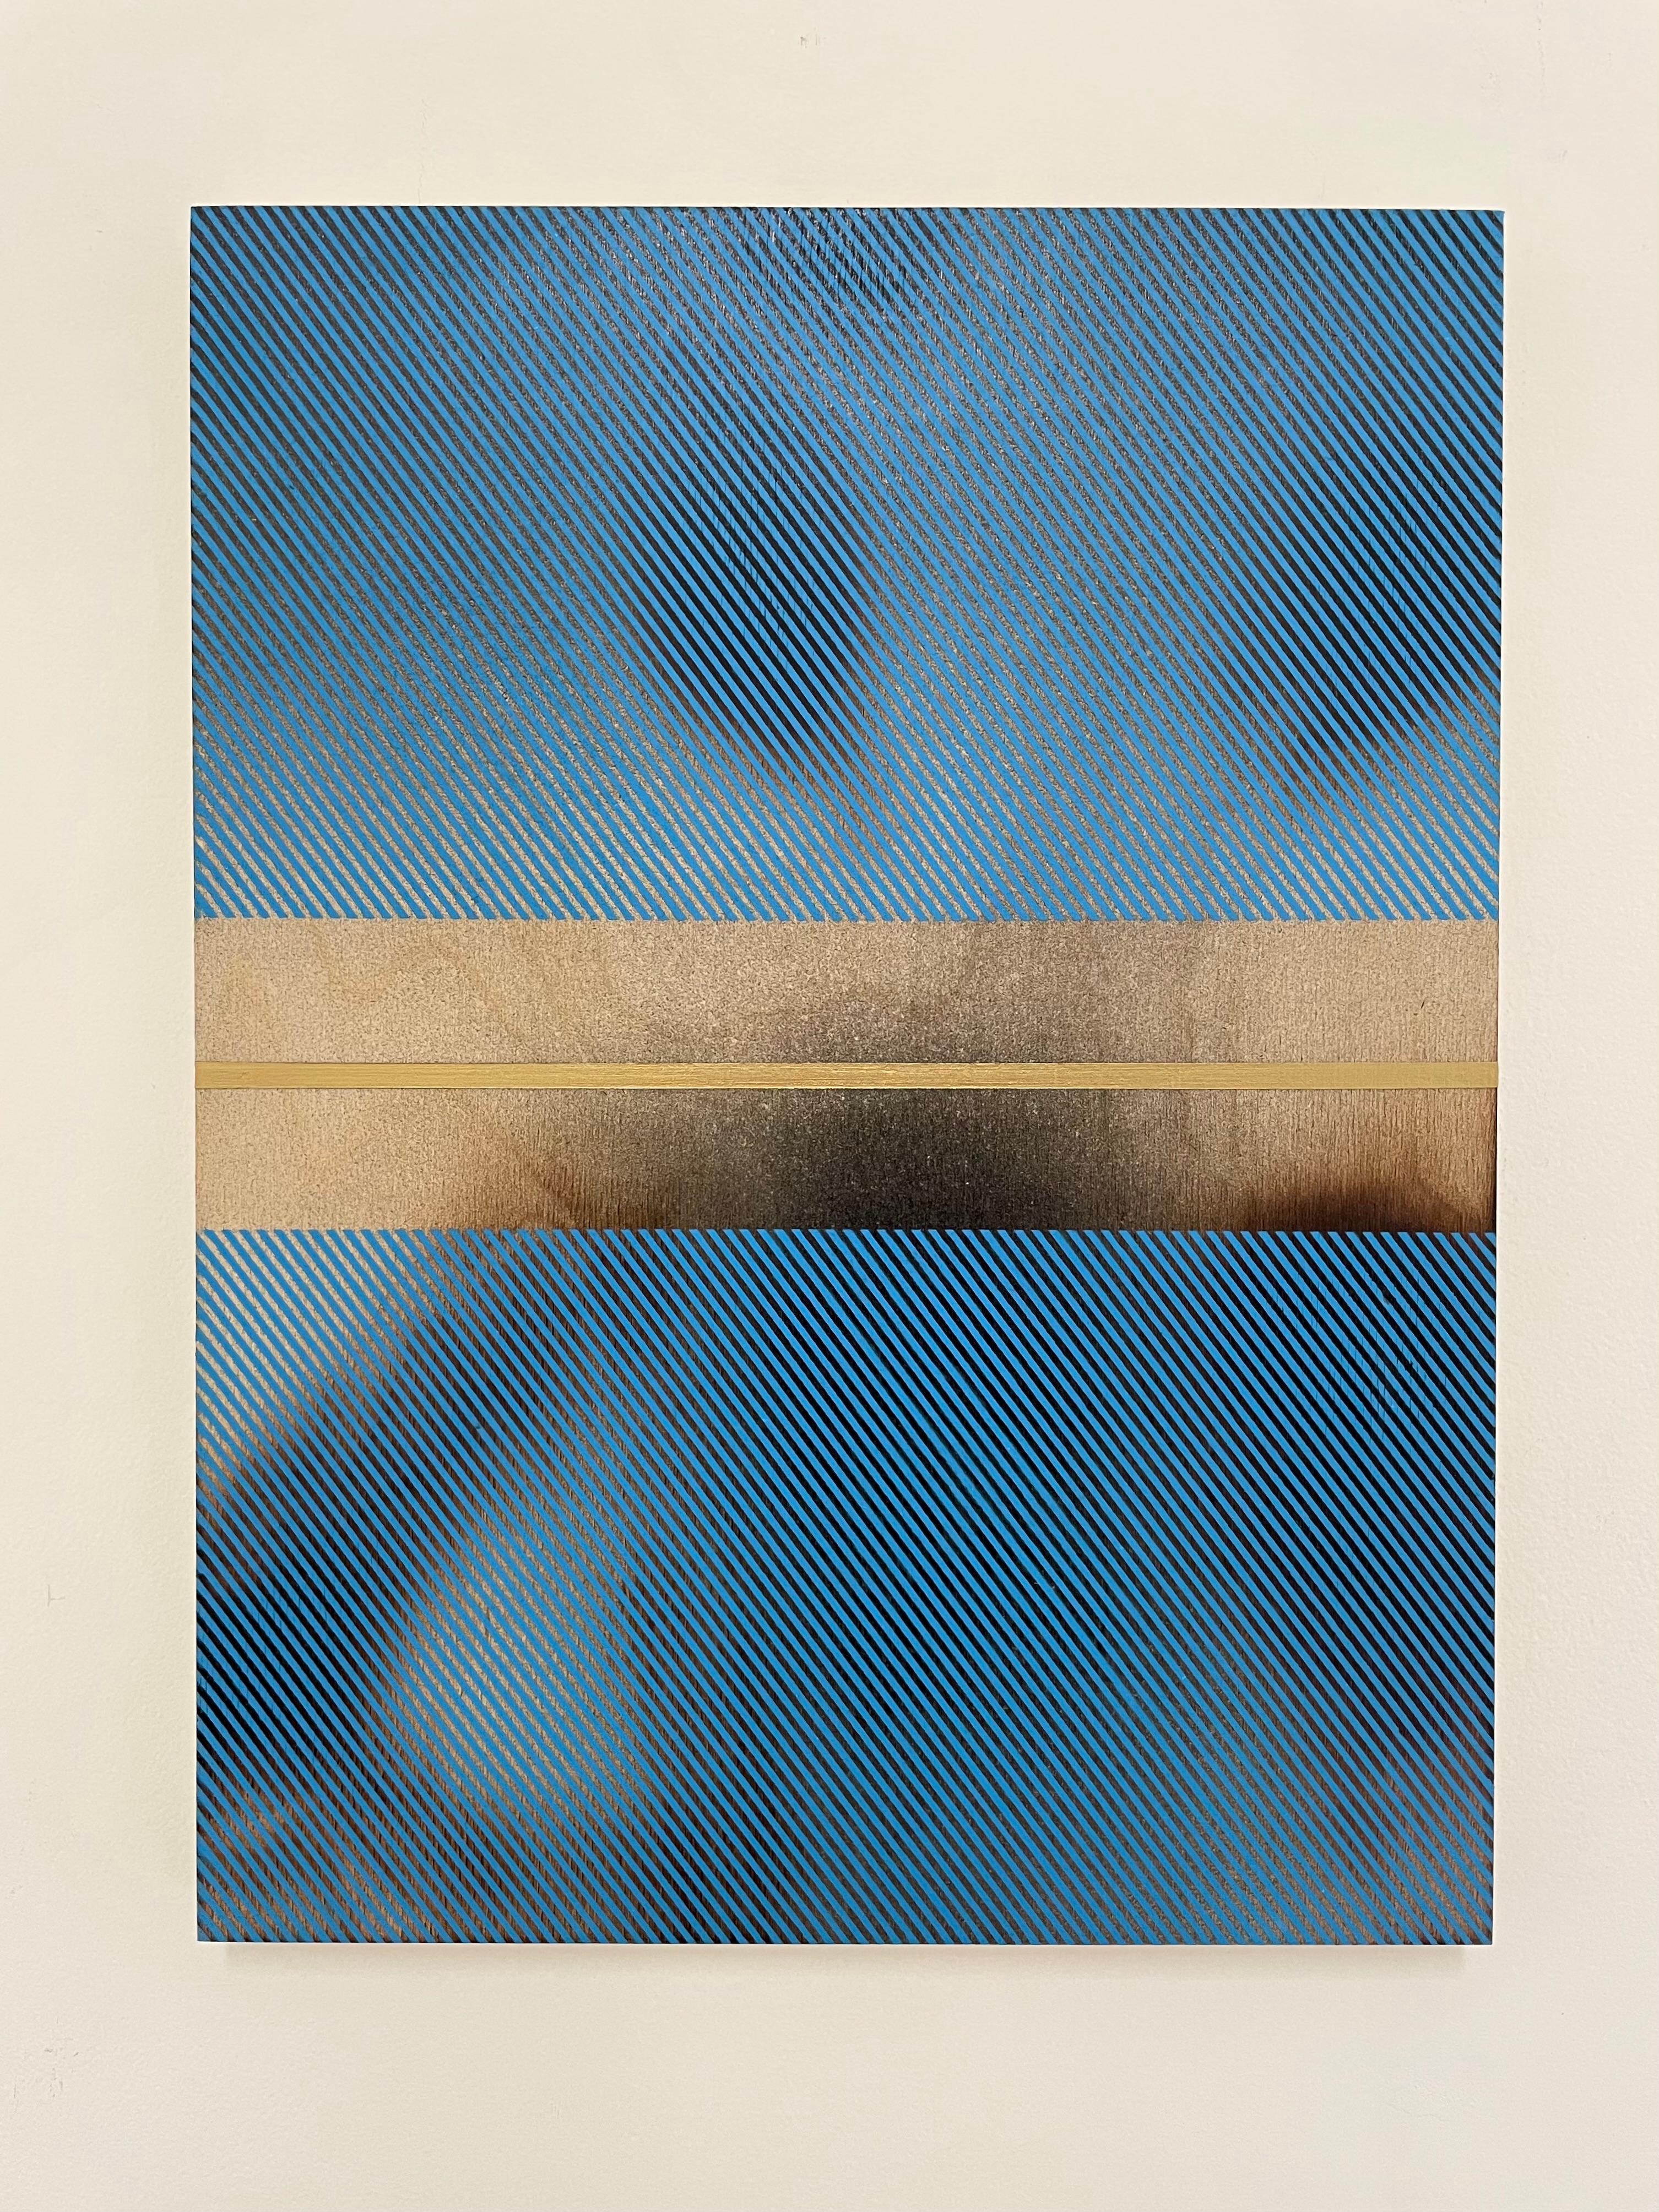 Sky Blue Mangata (grid painting minimal wood hard-edge dopamine color vibrant) - Minimalist Mixed Media Art by Melisa Taylor Metzger